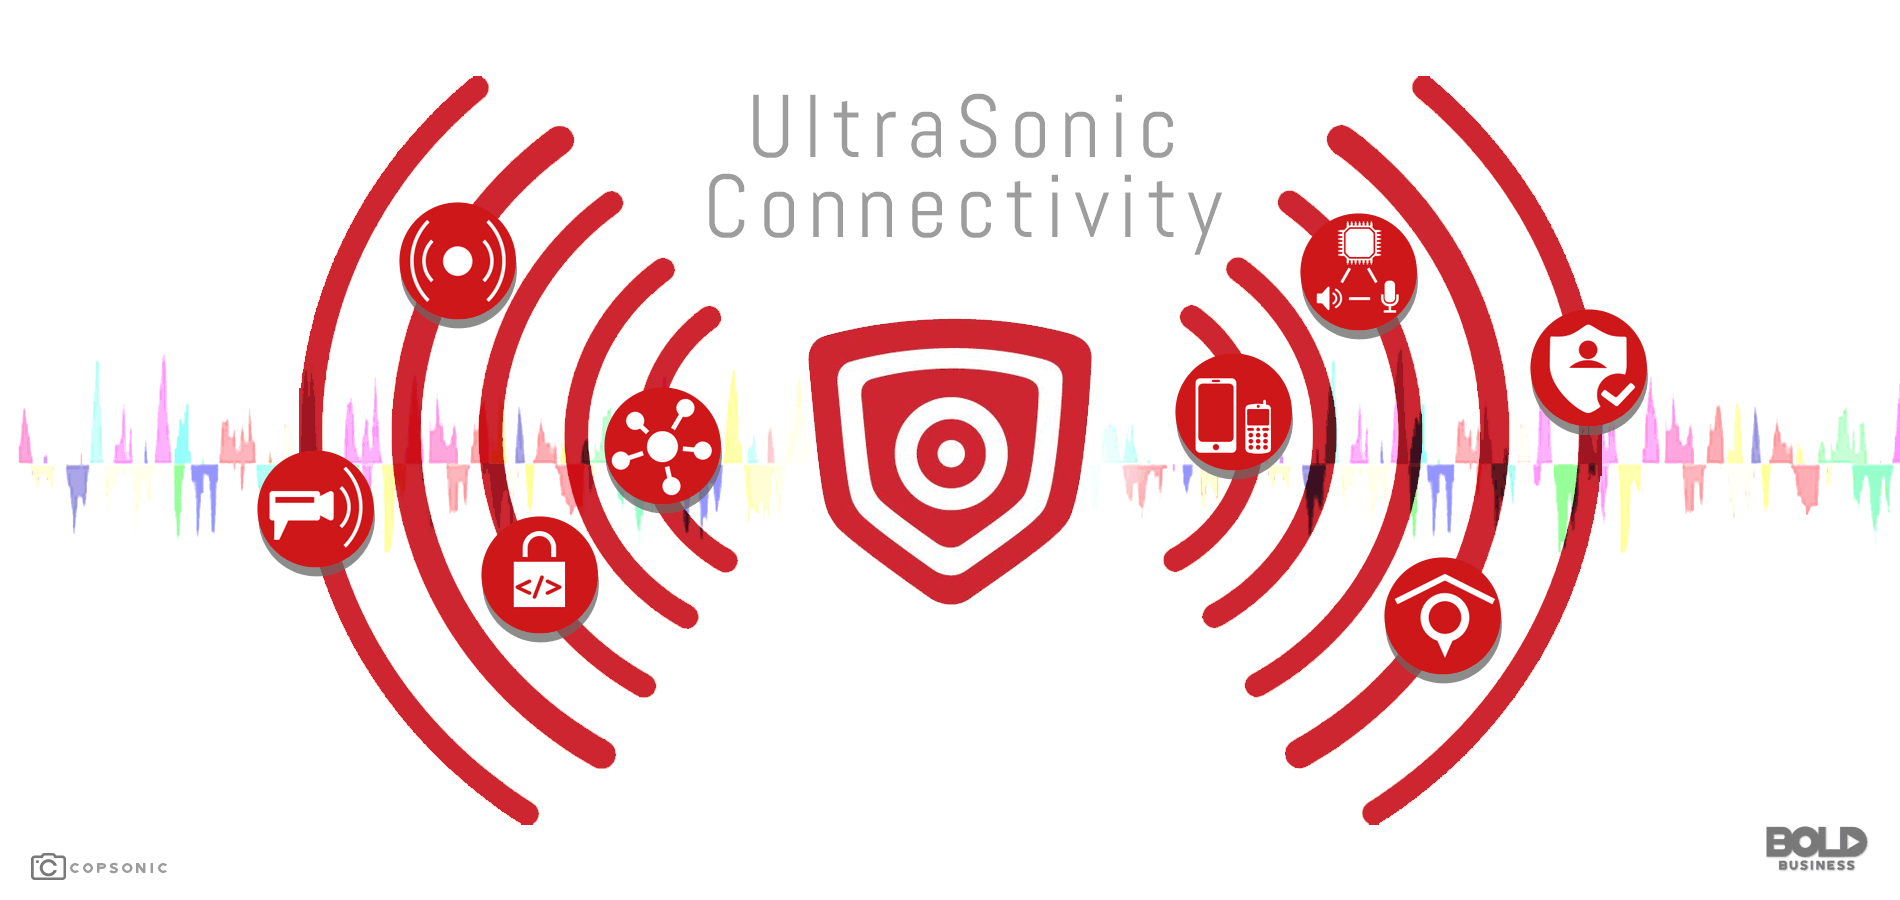 CopSonic's ultrasonic data transmission technology